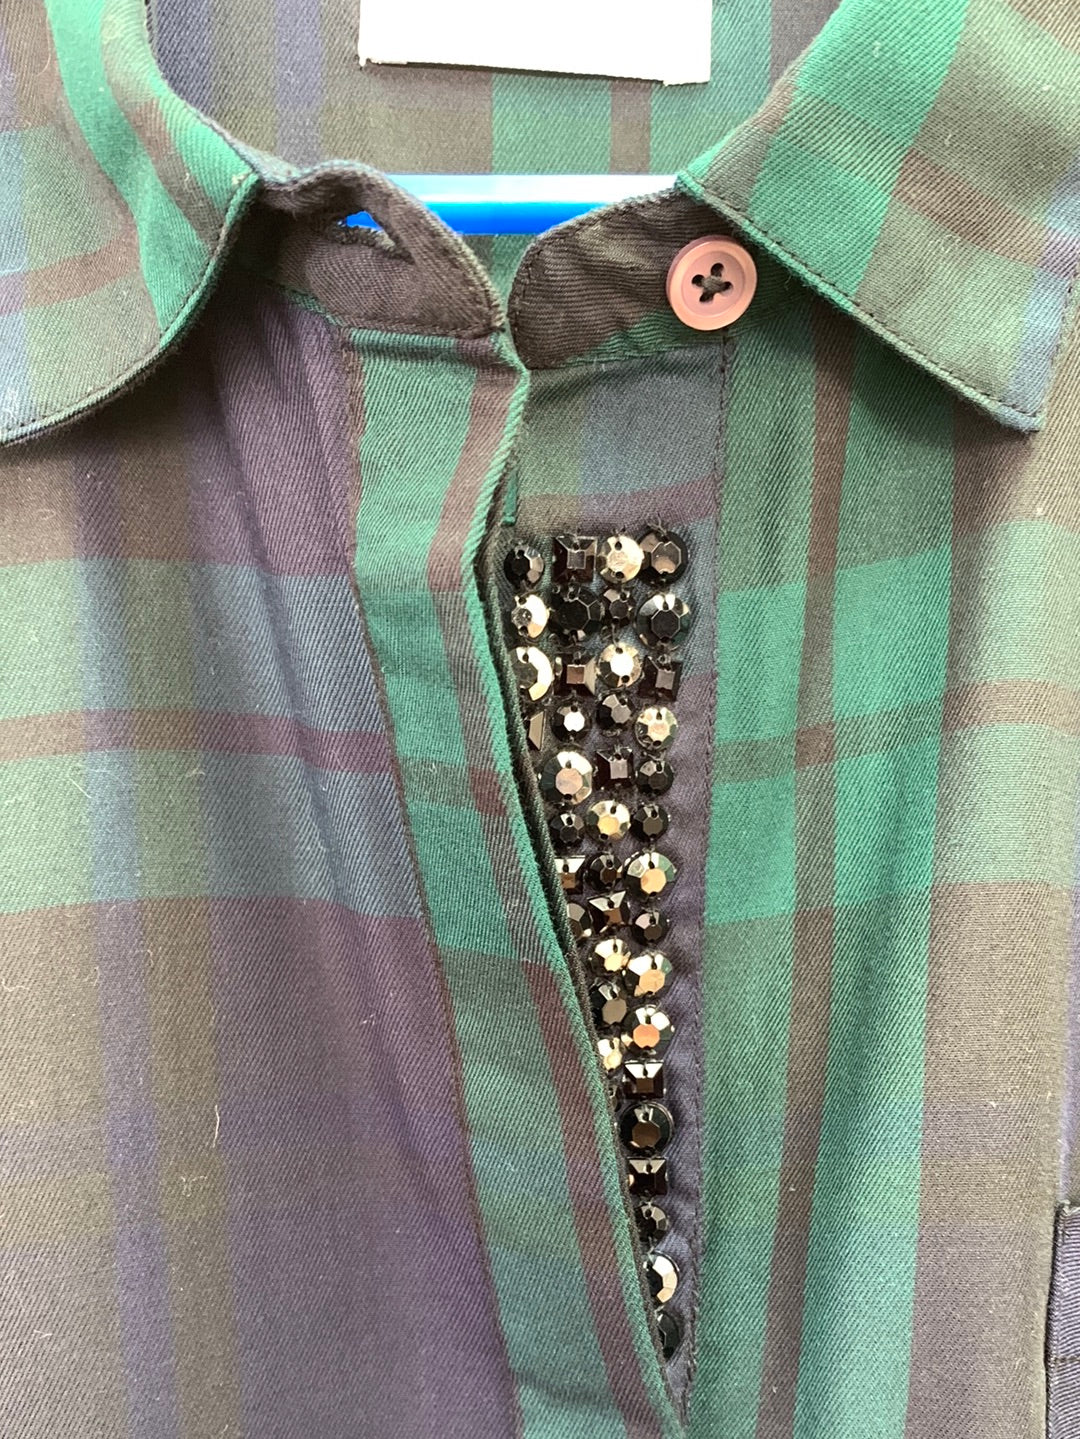 ORVIS green blue plaid Cotton Beaded Long Sleeve Button Up Shirt - 14